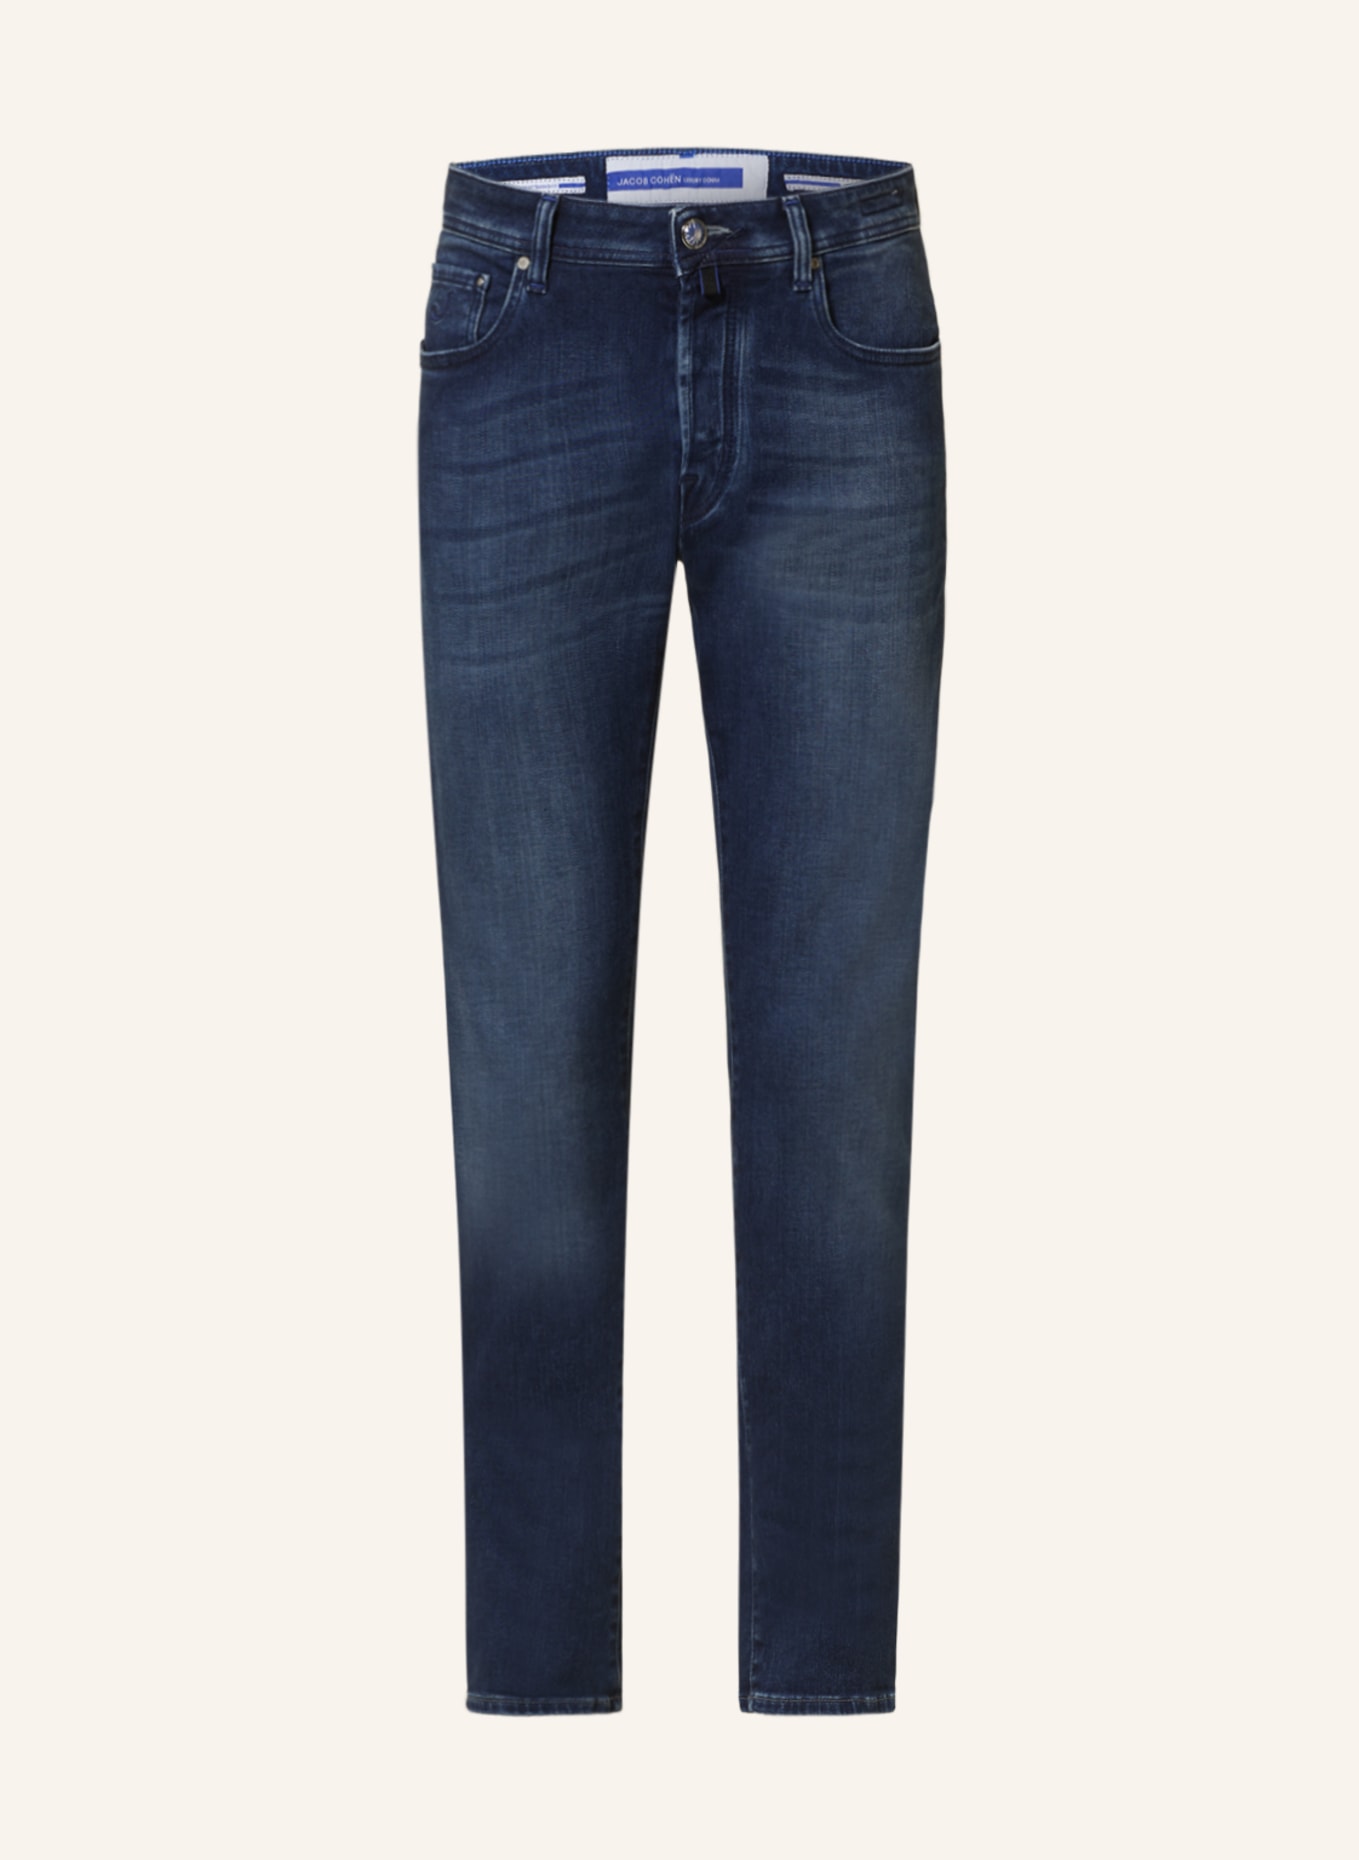 JACOB COHEN Jeans BARD Slim Fit, Farbe: 583D Mid Blue (Bild 1)